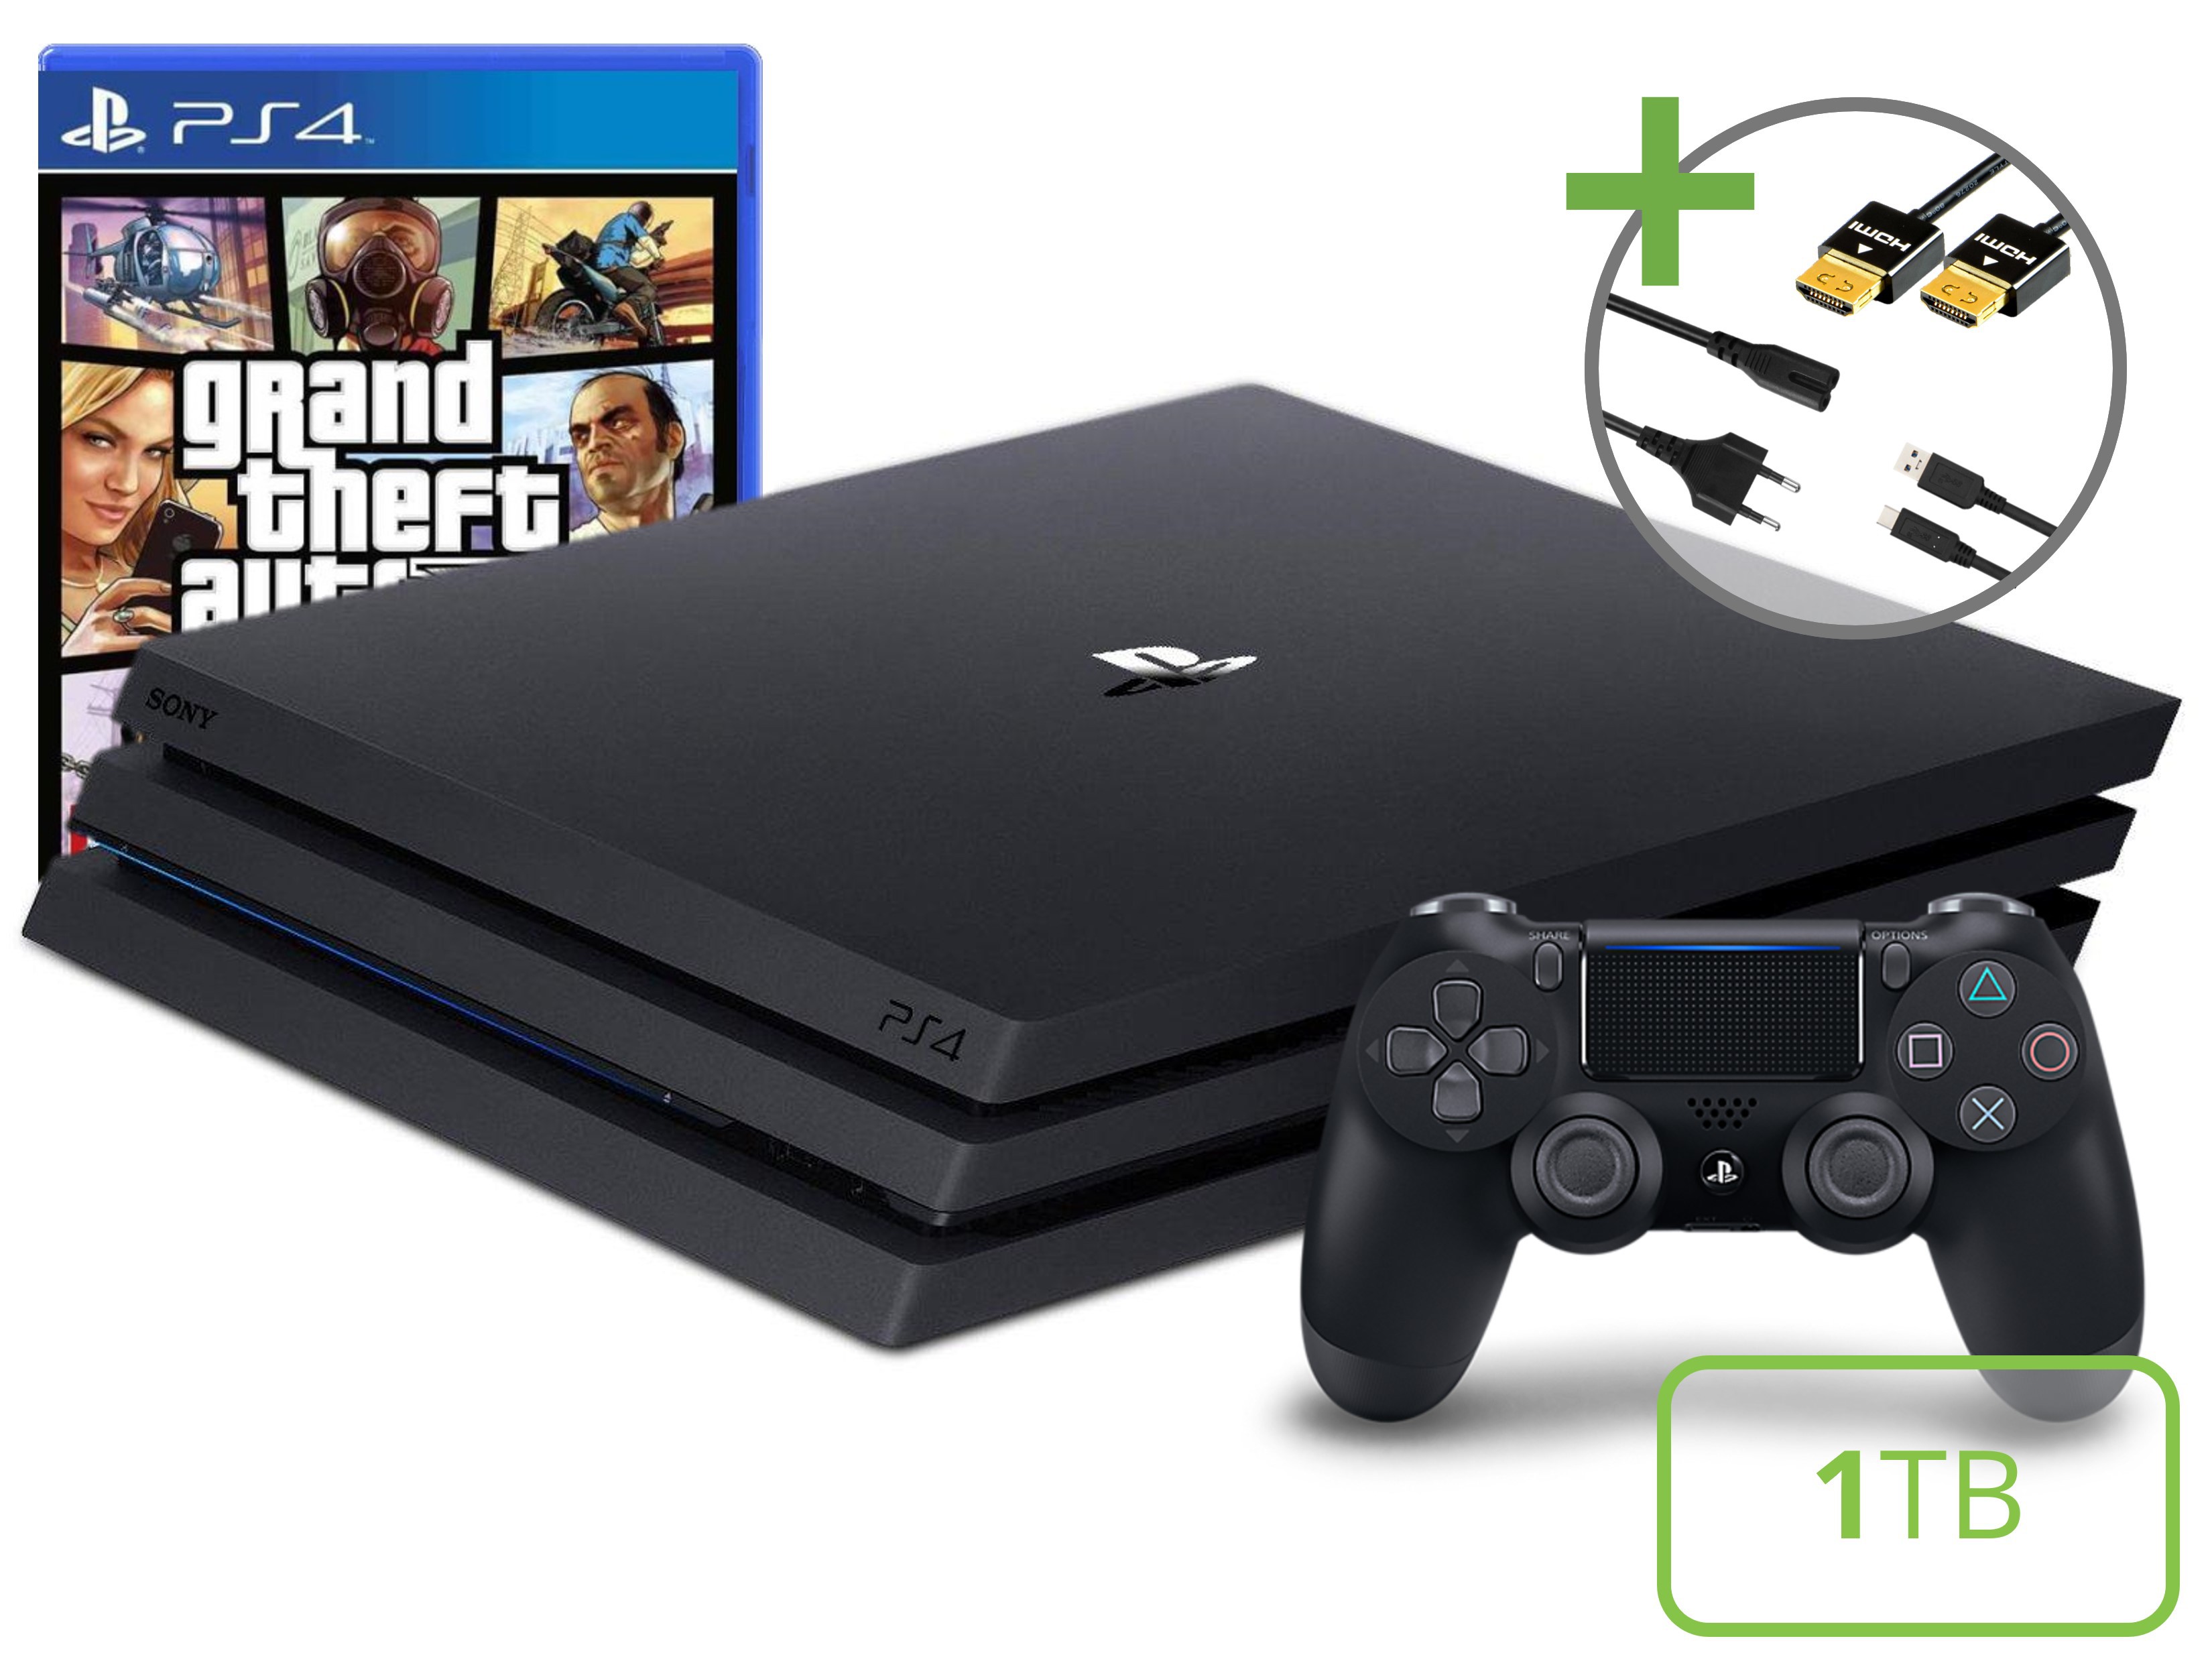 Sony PlayStation 4 Pro Starter Pack - 1TB Grand Theft Auto V Edition - Playstation 4 Hardware